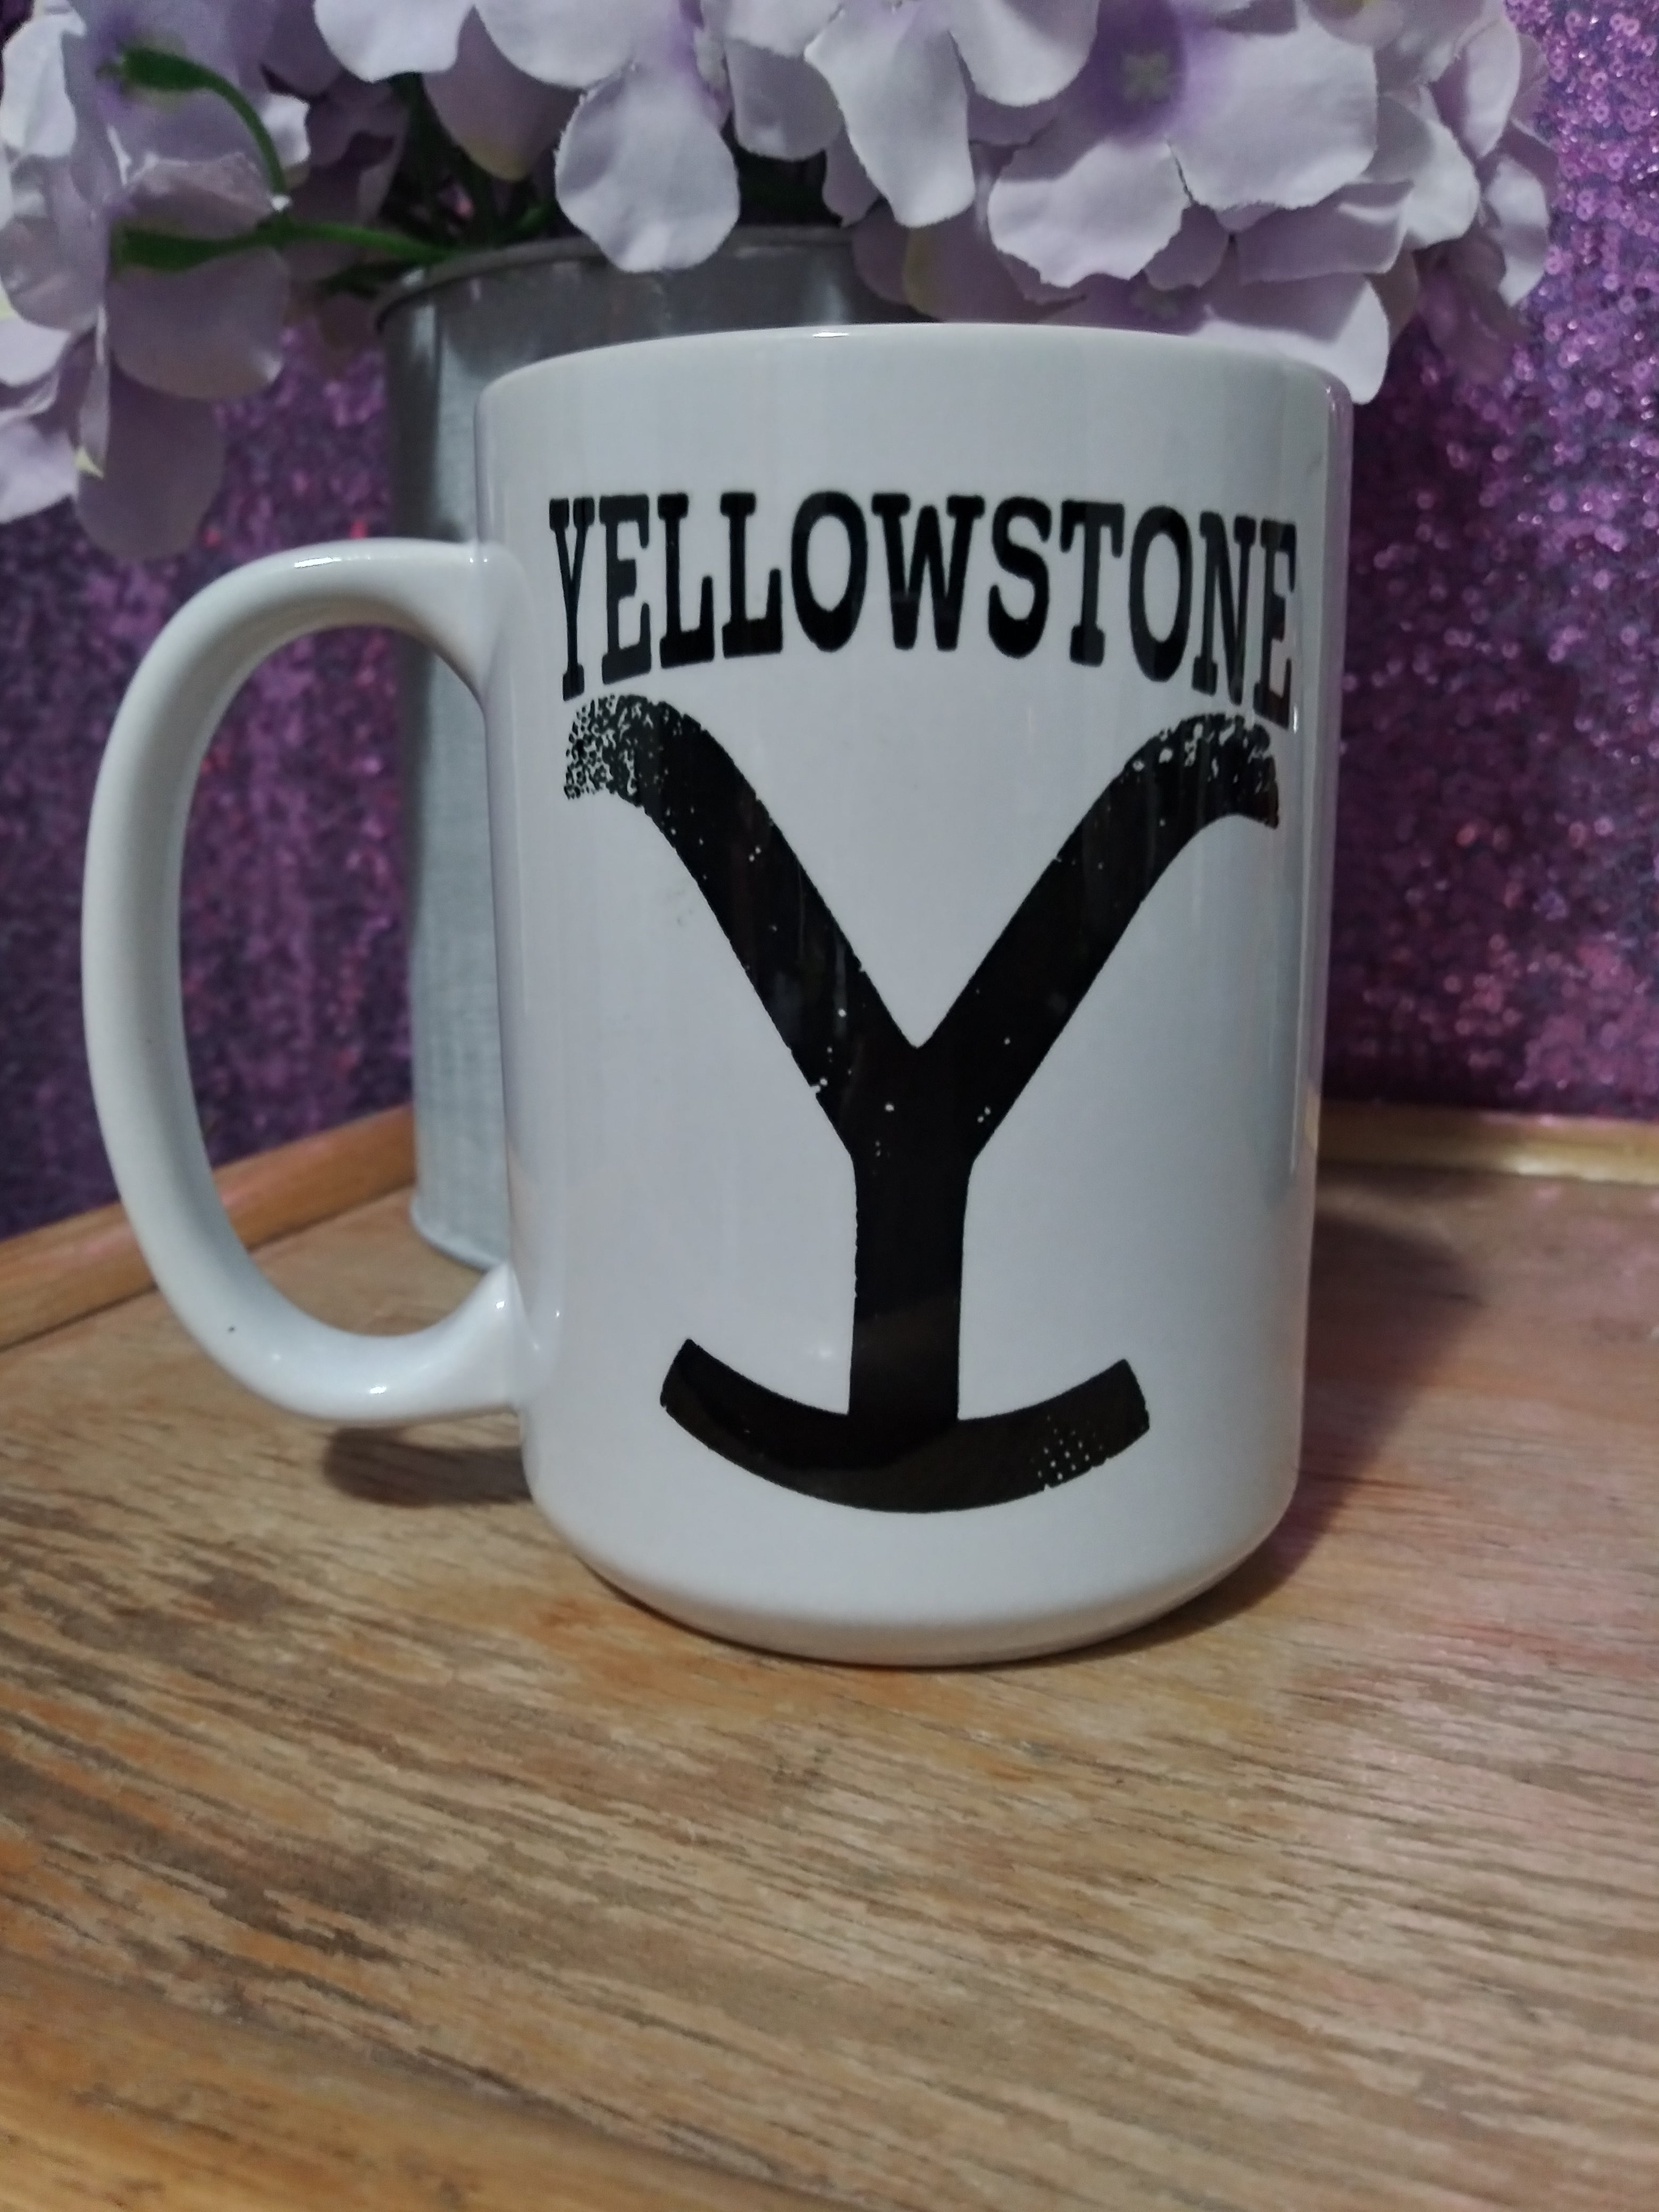 Yellowstone mug